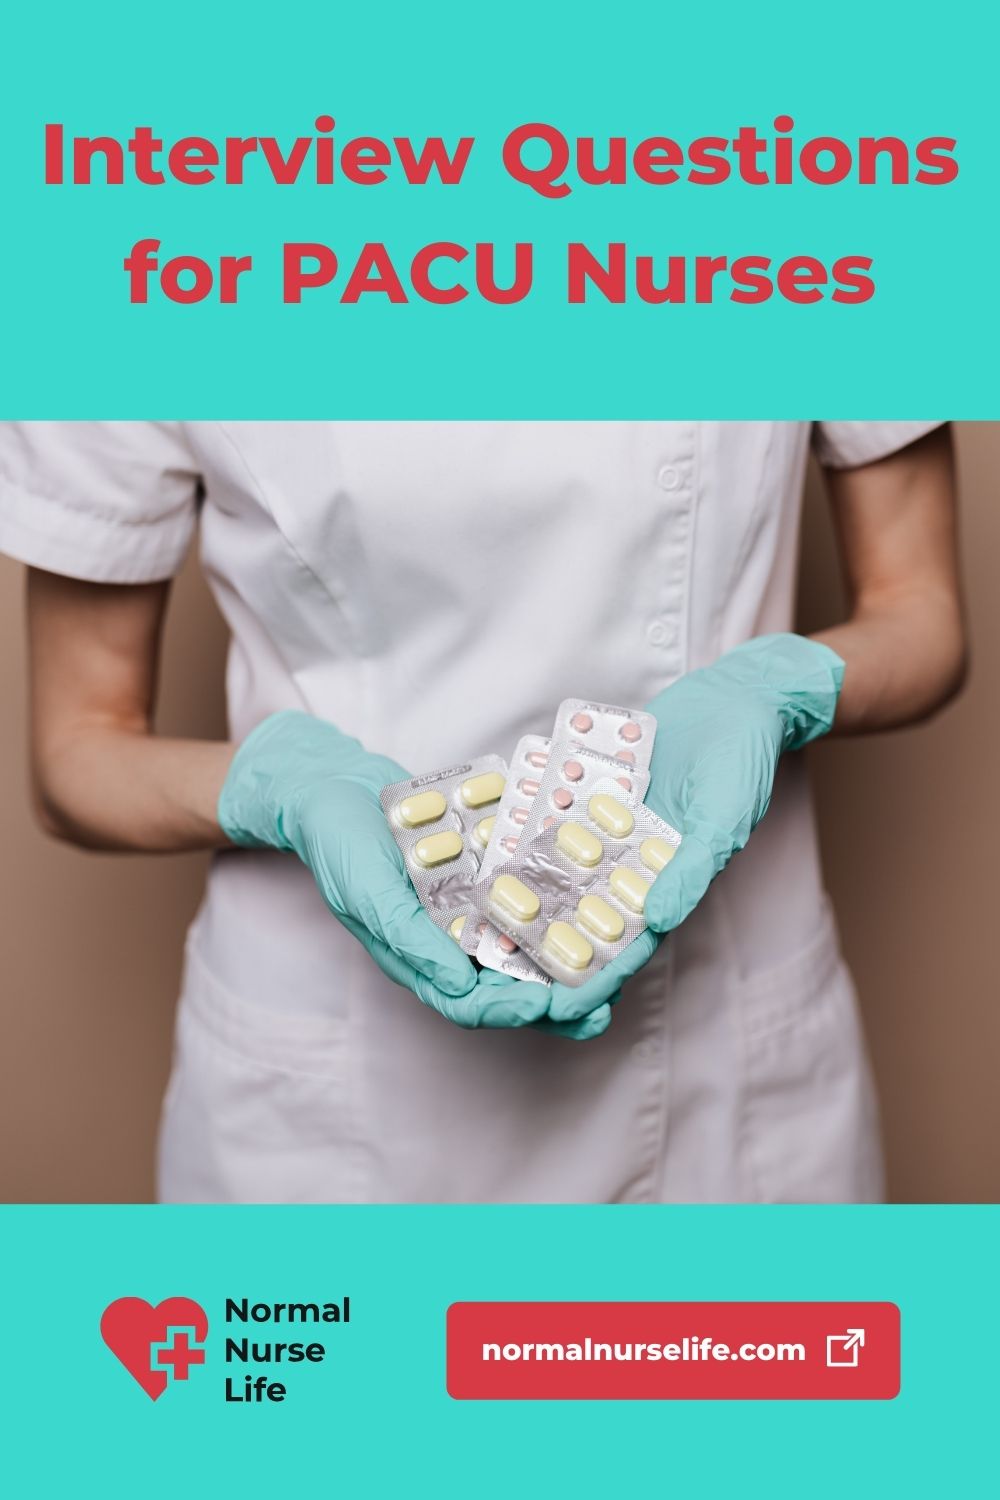 Interview questions for PACU nurses